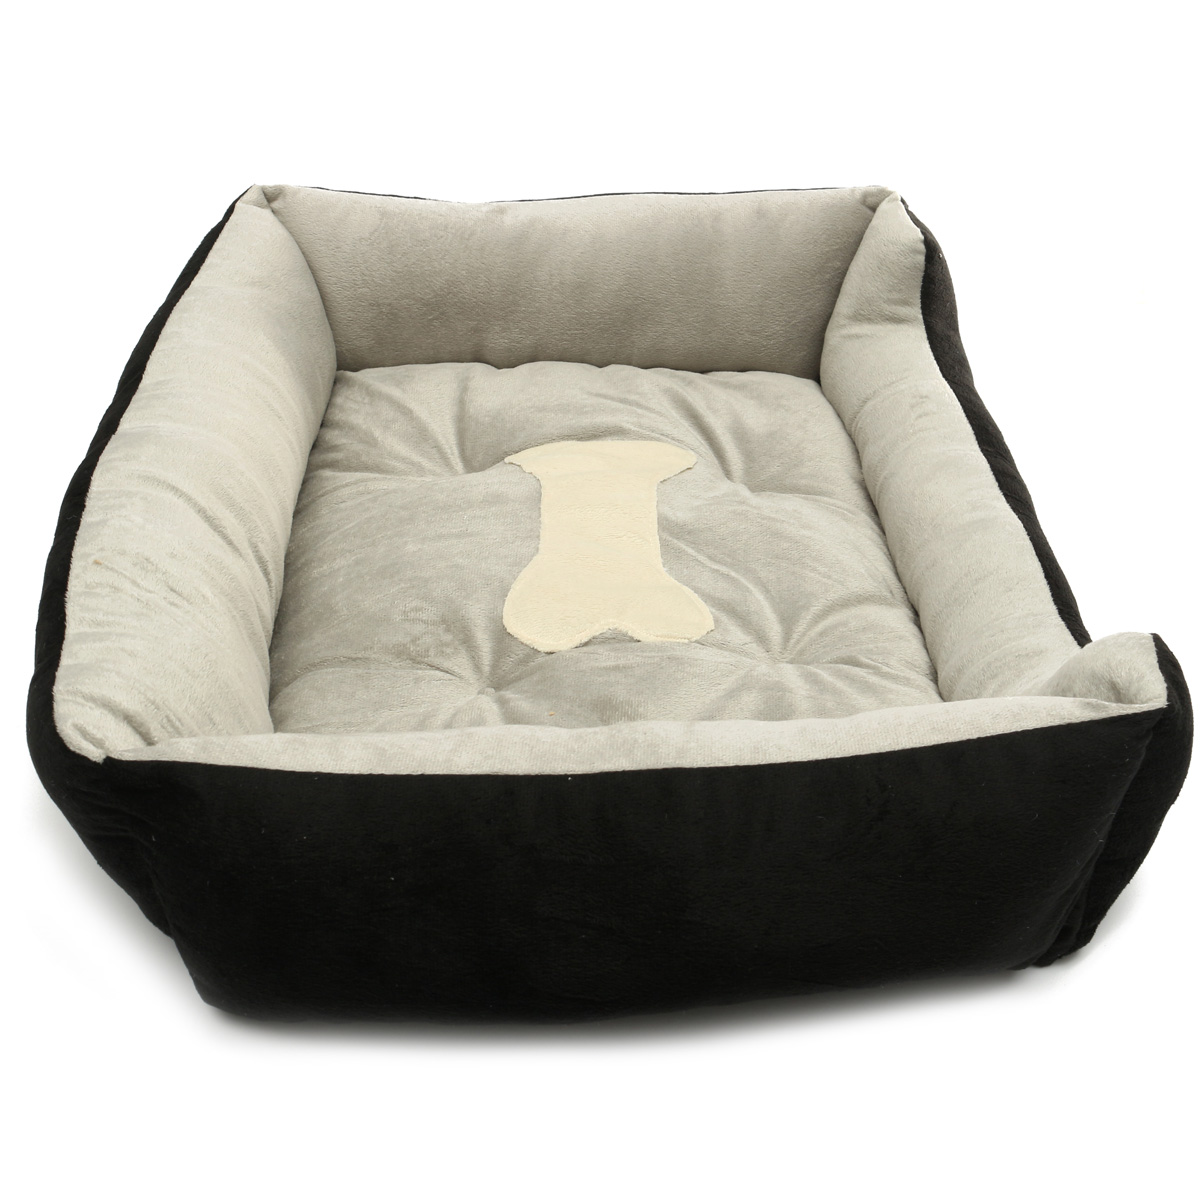 Large-Pet-Dog-Warm-Bed-Puppy-Cat-Soft-Fleece-Cozy-Mat-Pad-Kennel-Cushion-Pet-Mat-1037381-9